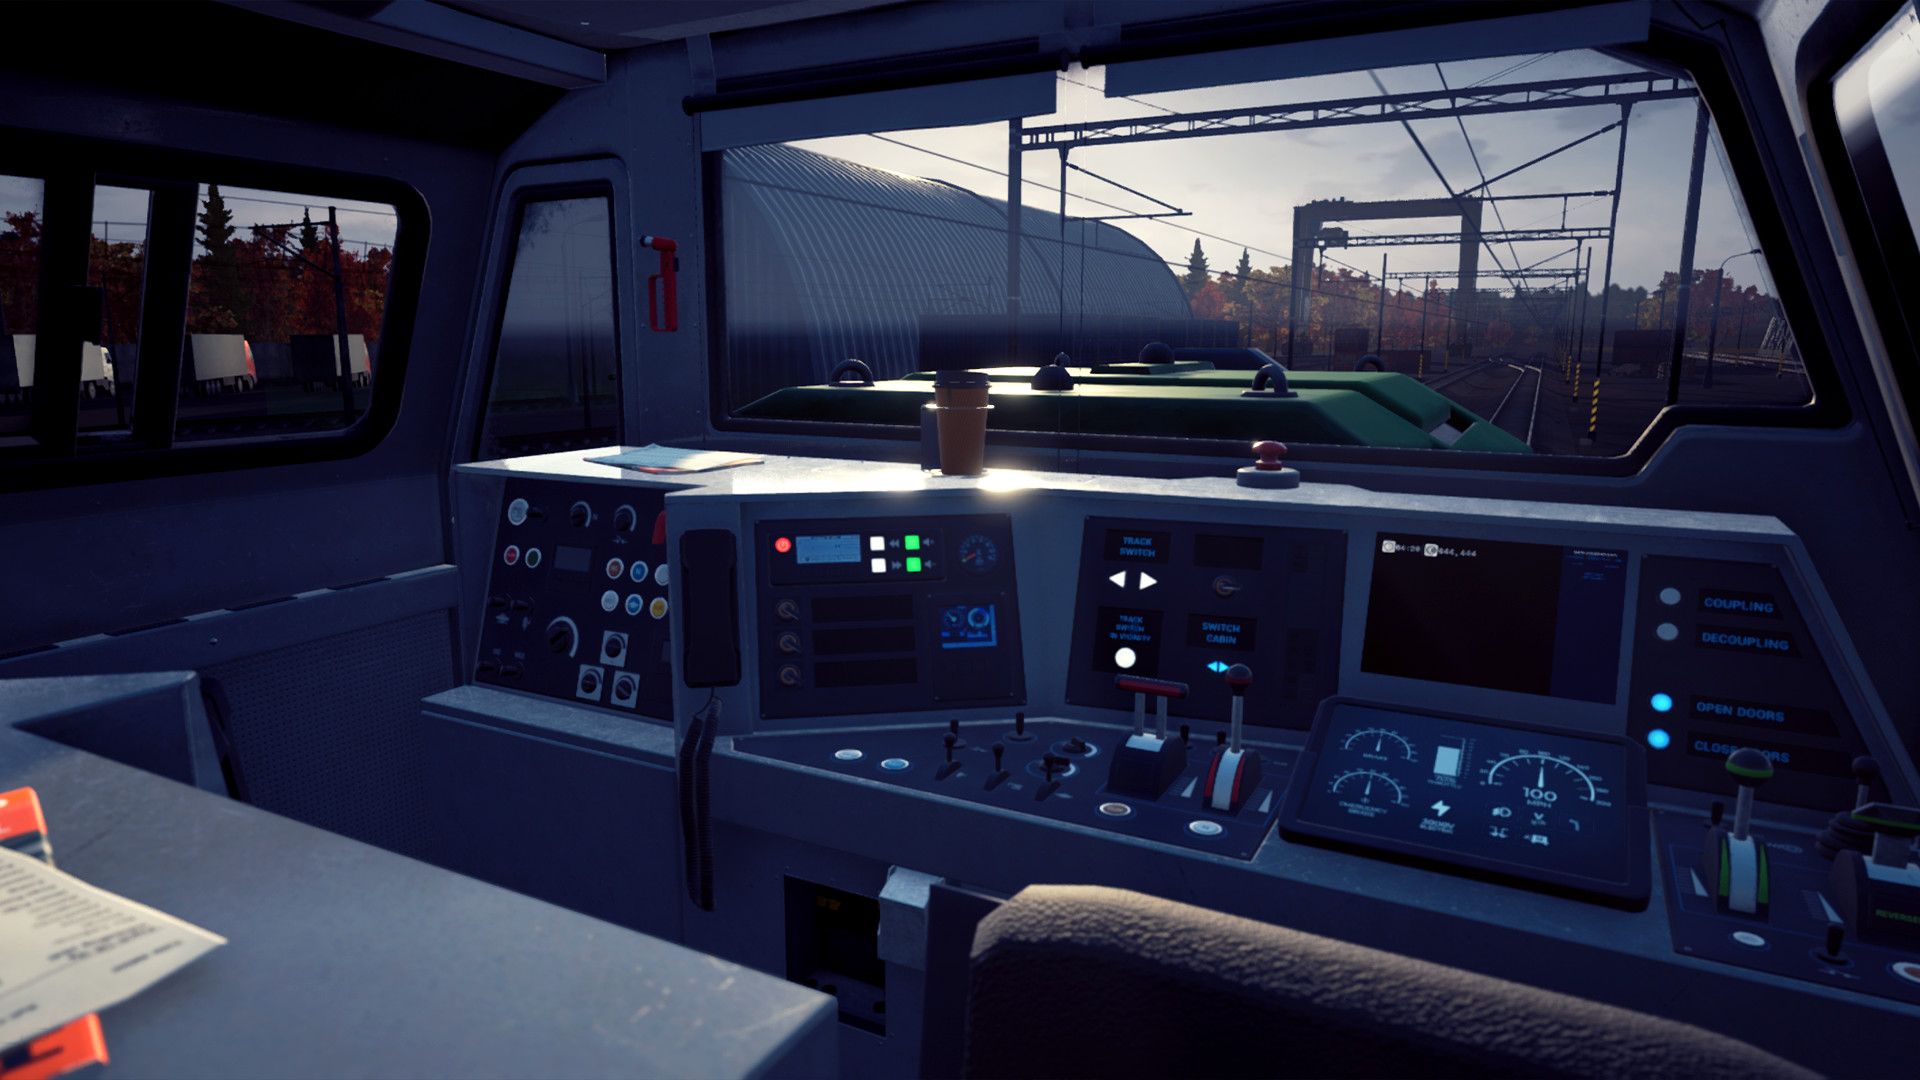 Train Life: A Railway Simulator Steam Account [$ 4.52]